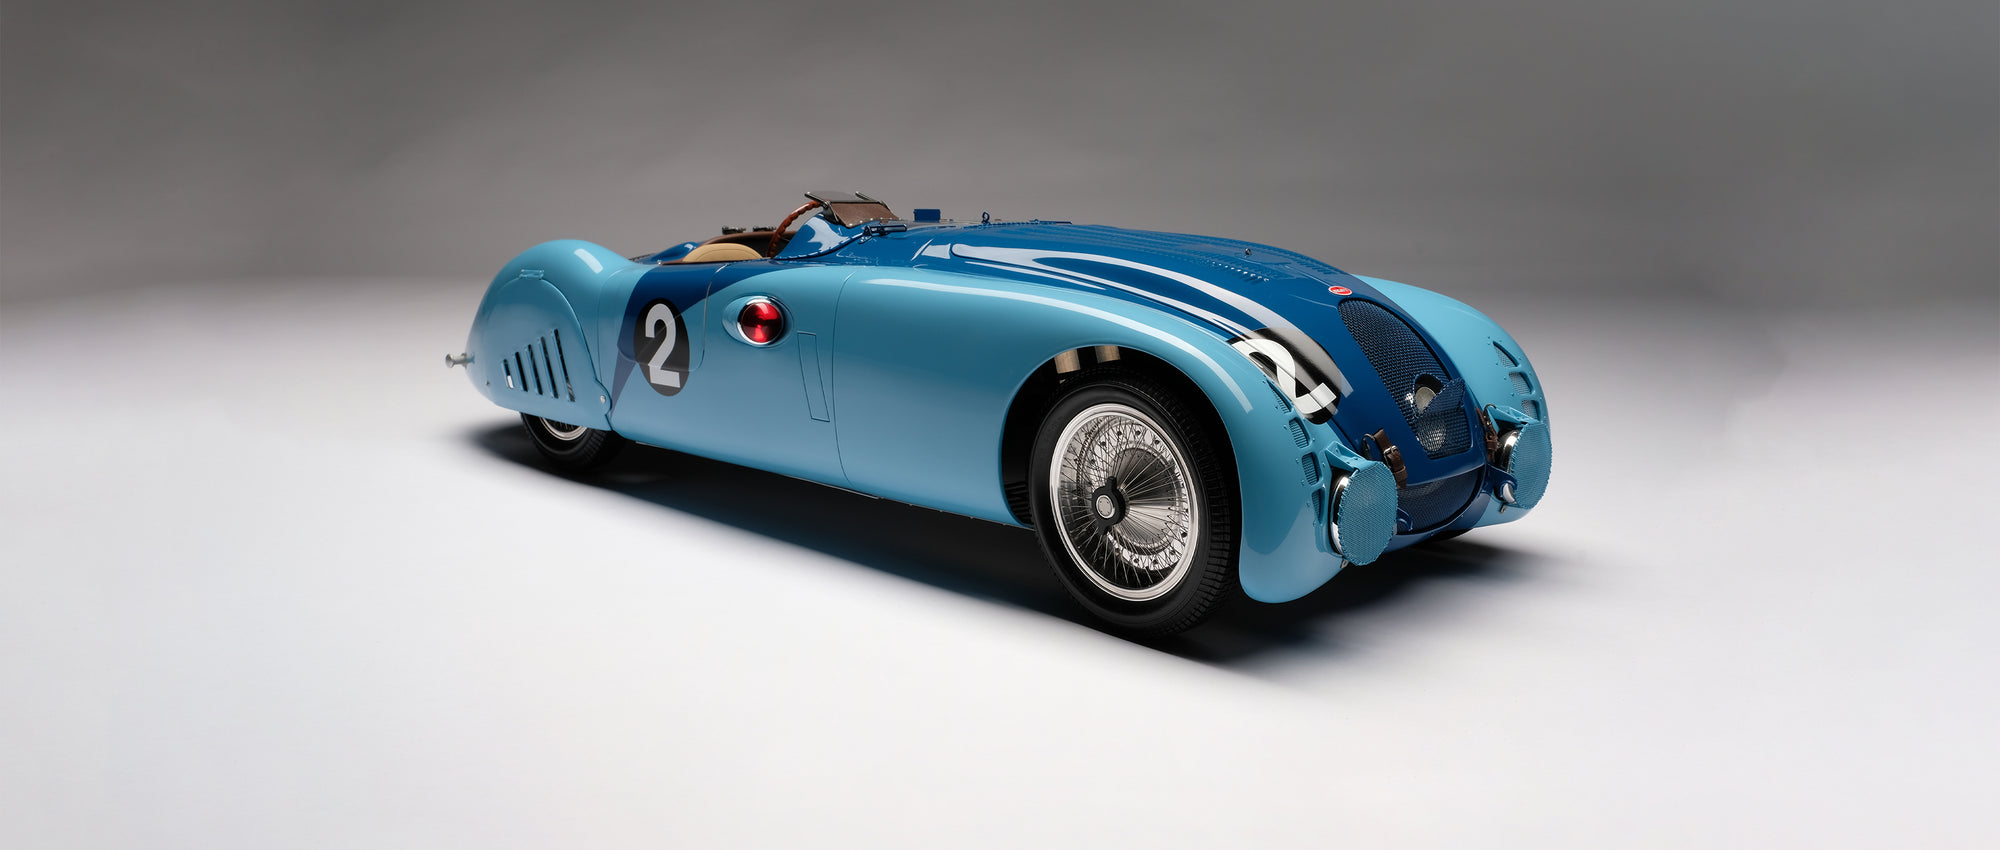 Bugatti Type 57G "Tank" - 1937 Le Mans Winner